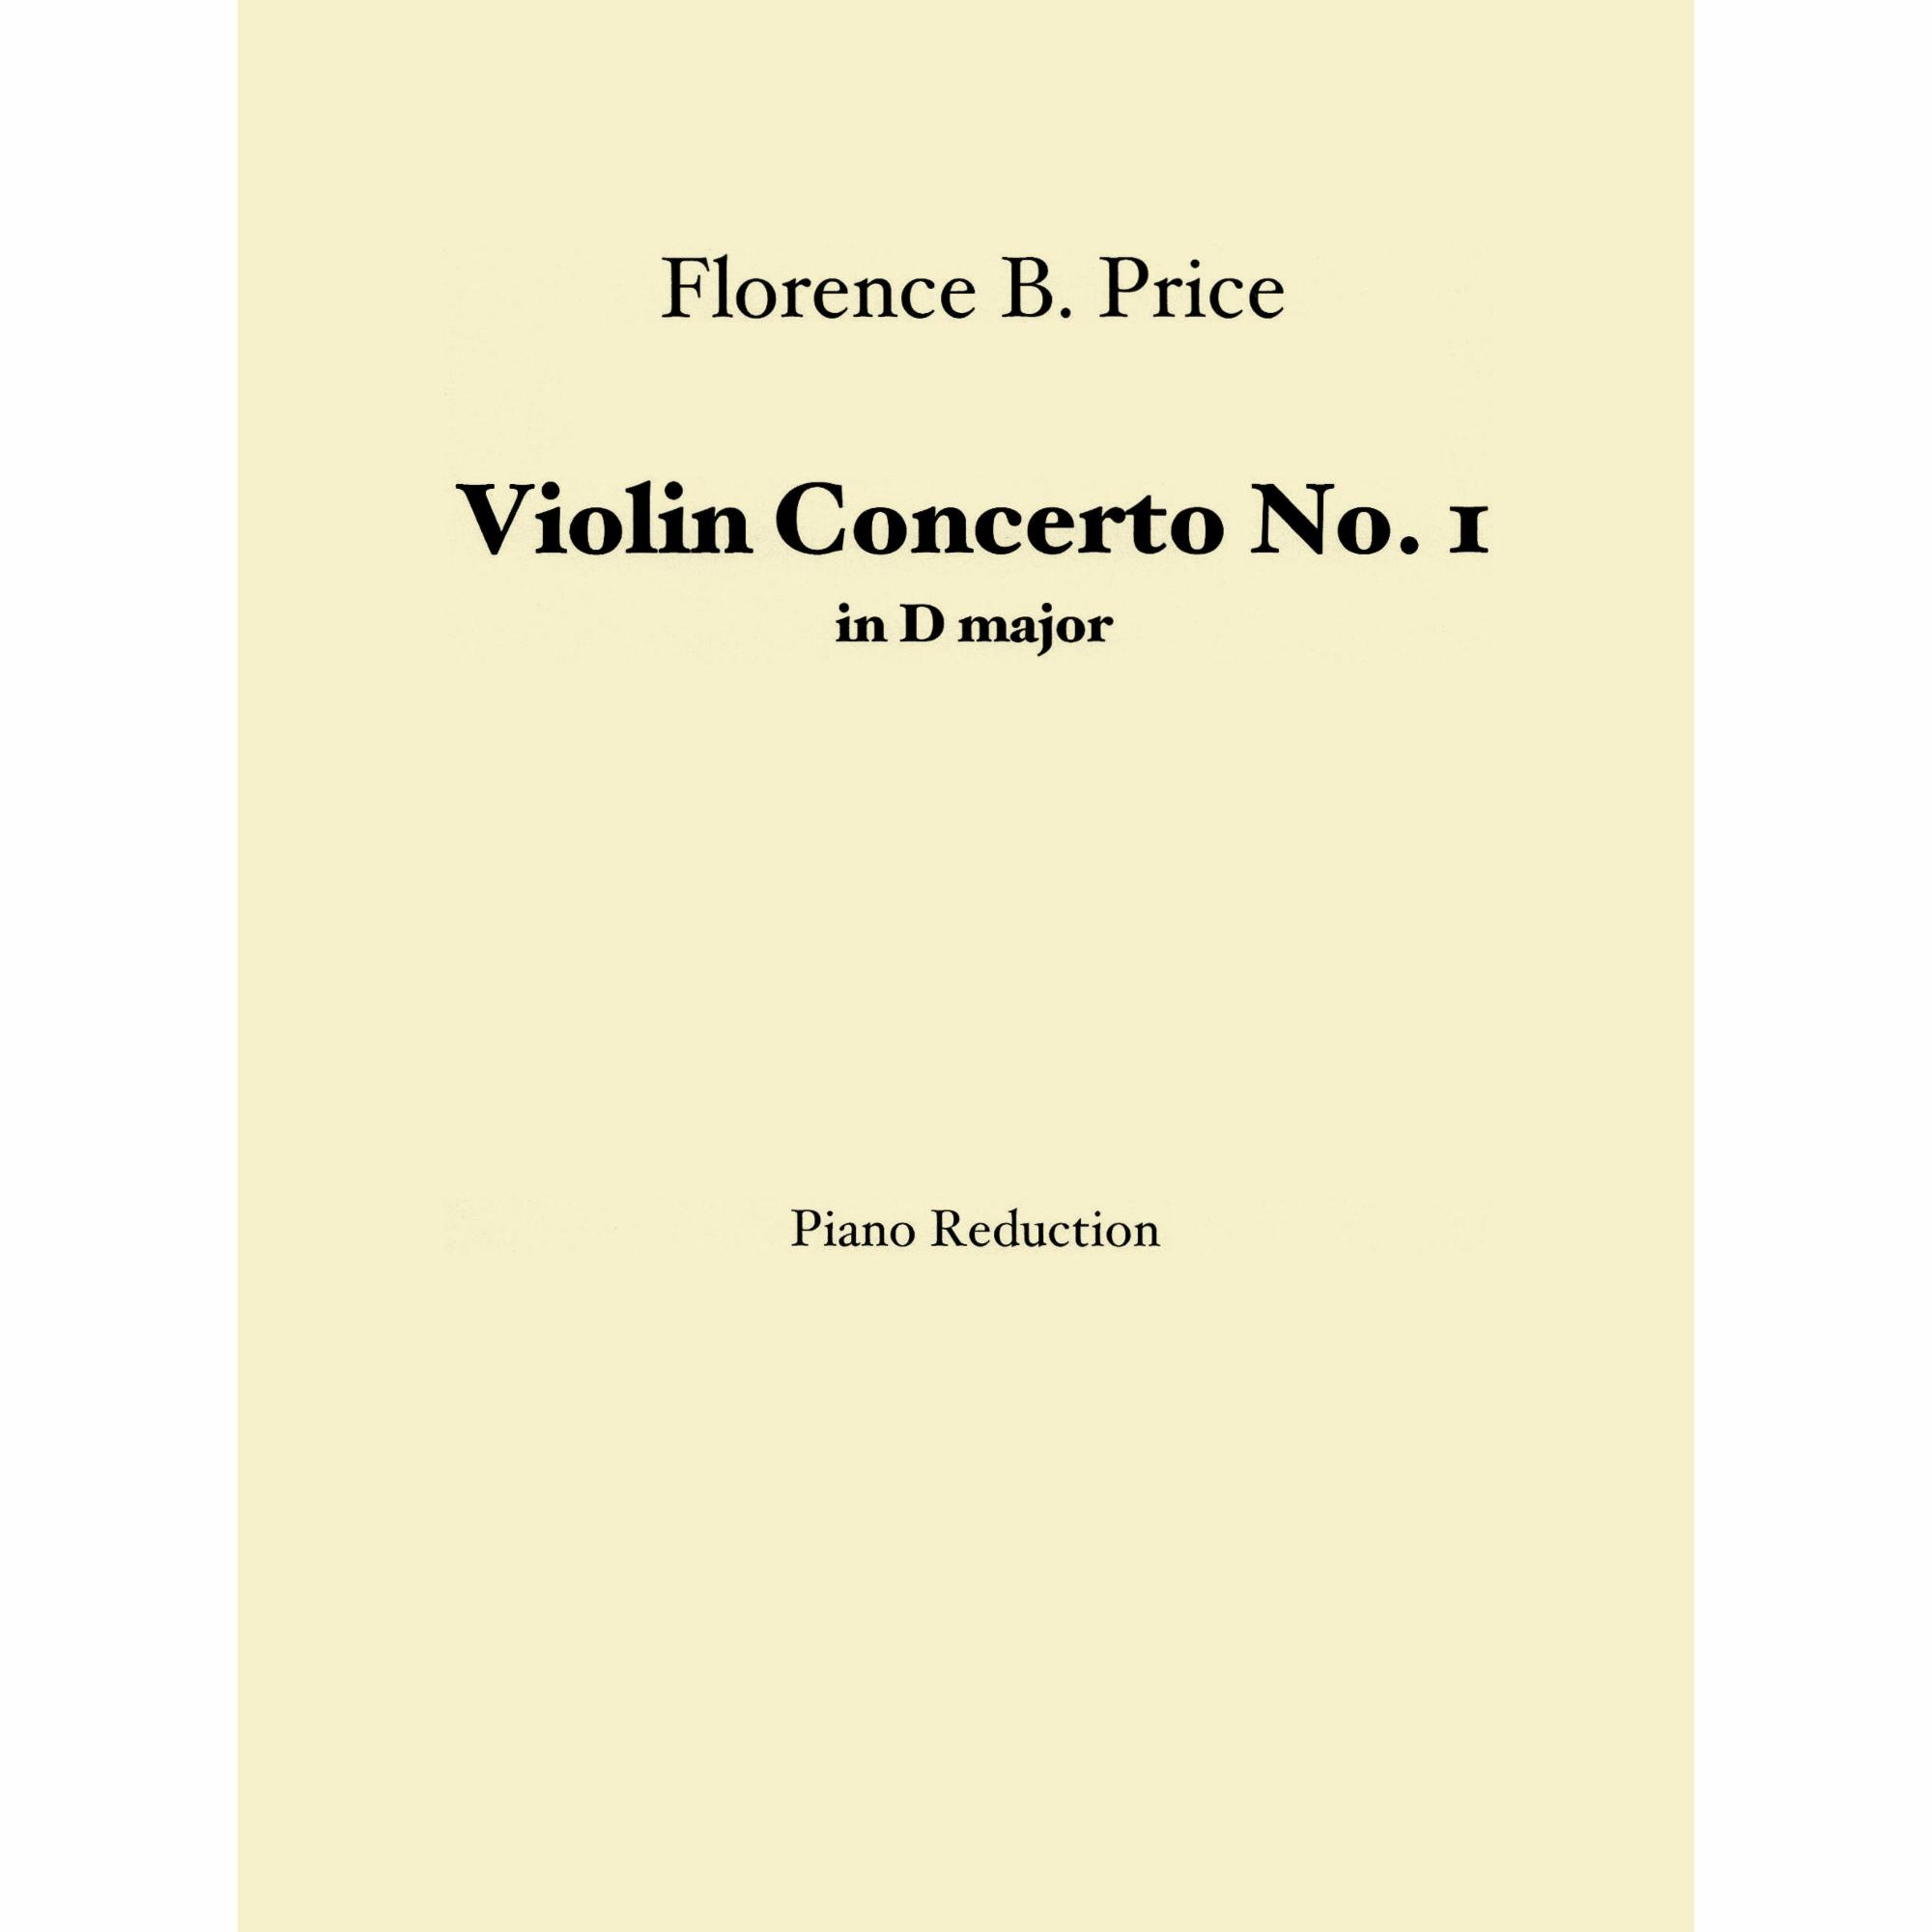 Price -- Violin Concerto No. 1 in D Major for Violin and Piano